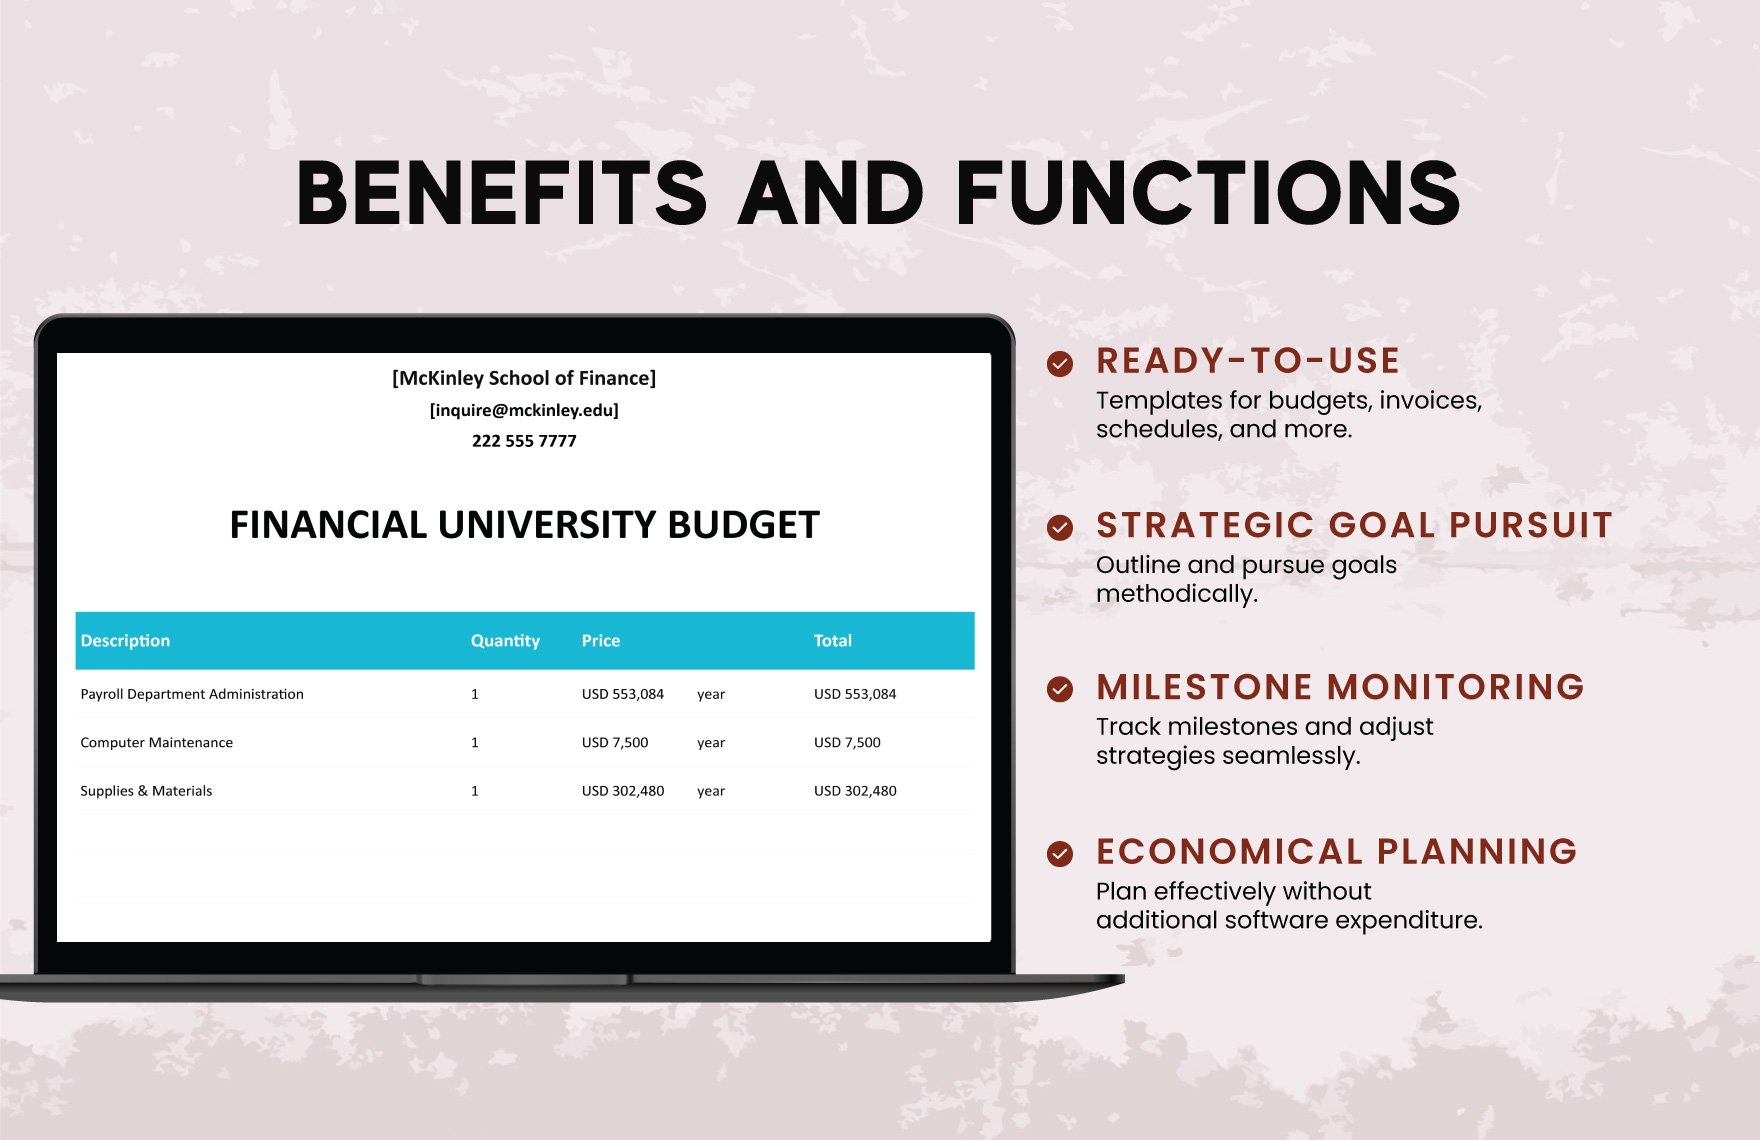 Financial University Budget Template